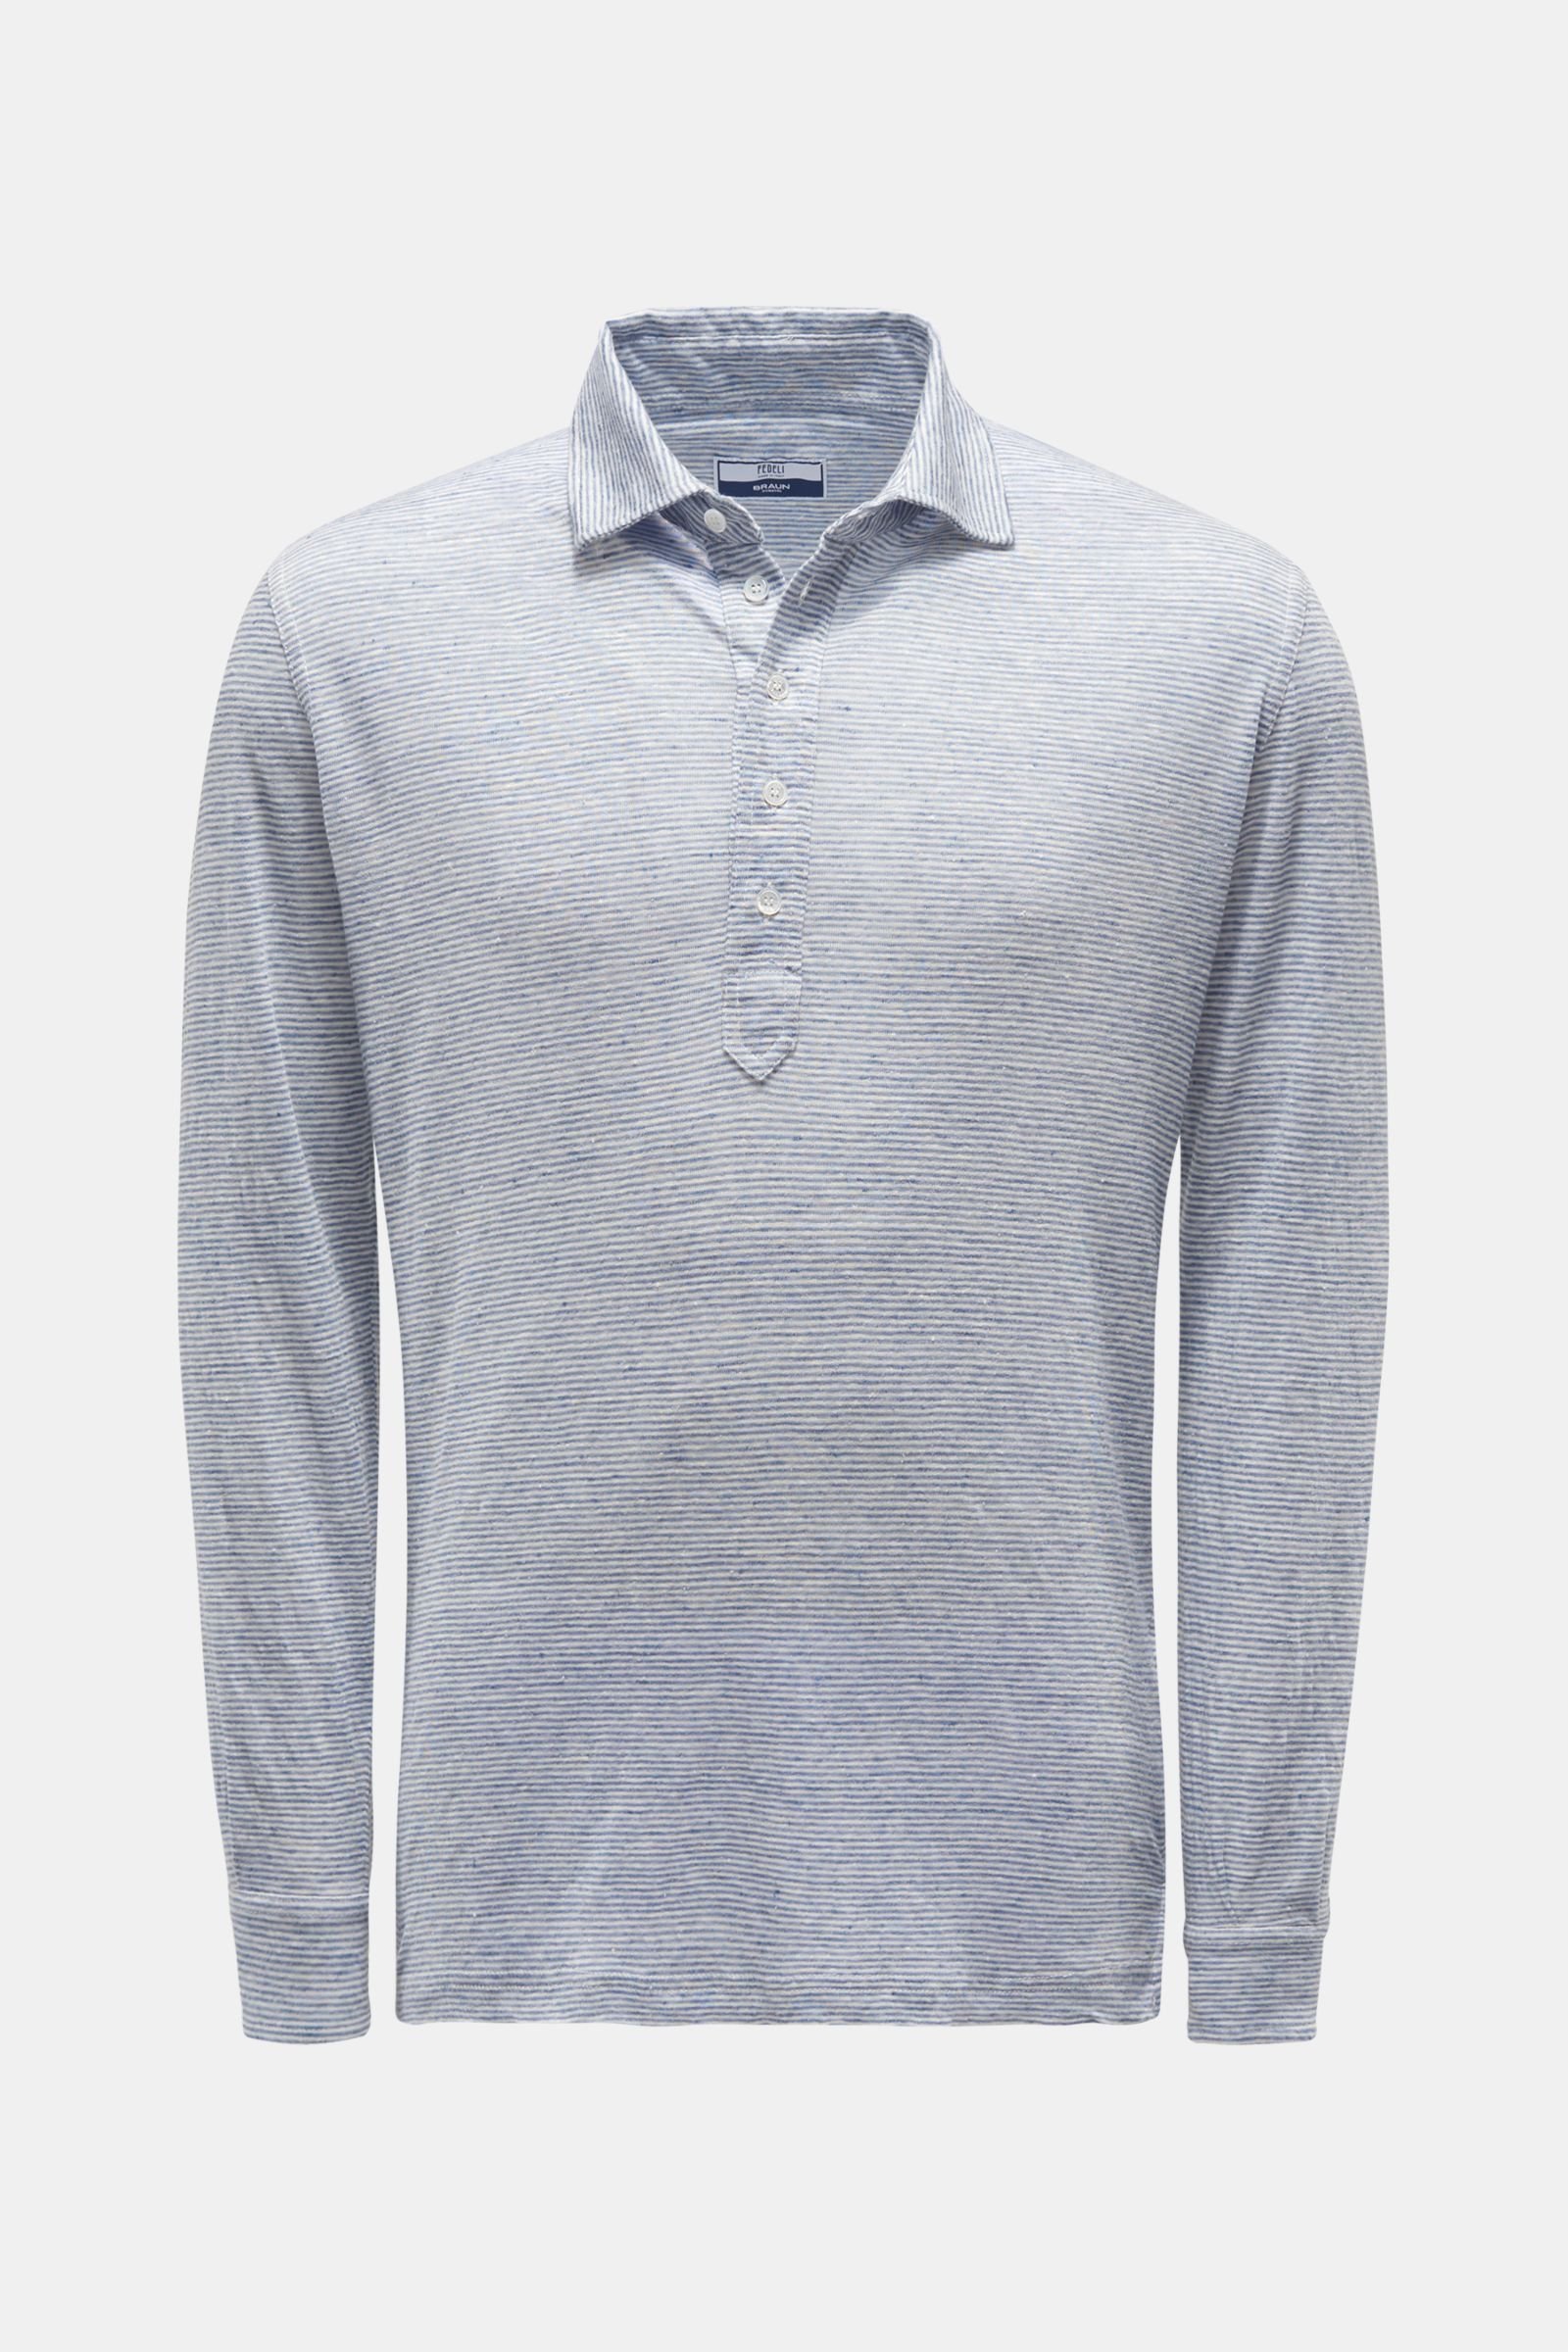 Linen long sleeve polo shirt 'Five' grey-blue/white striped